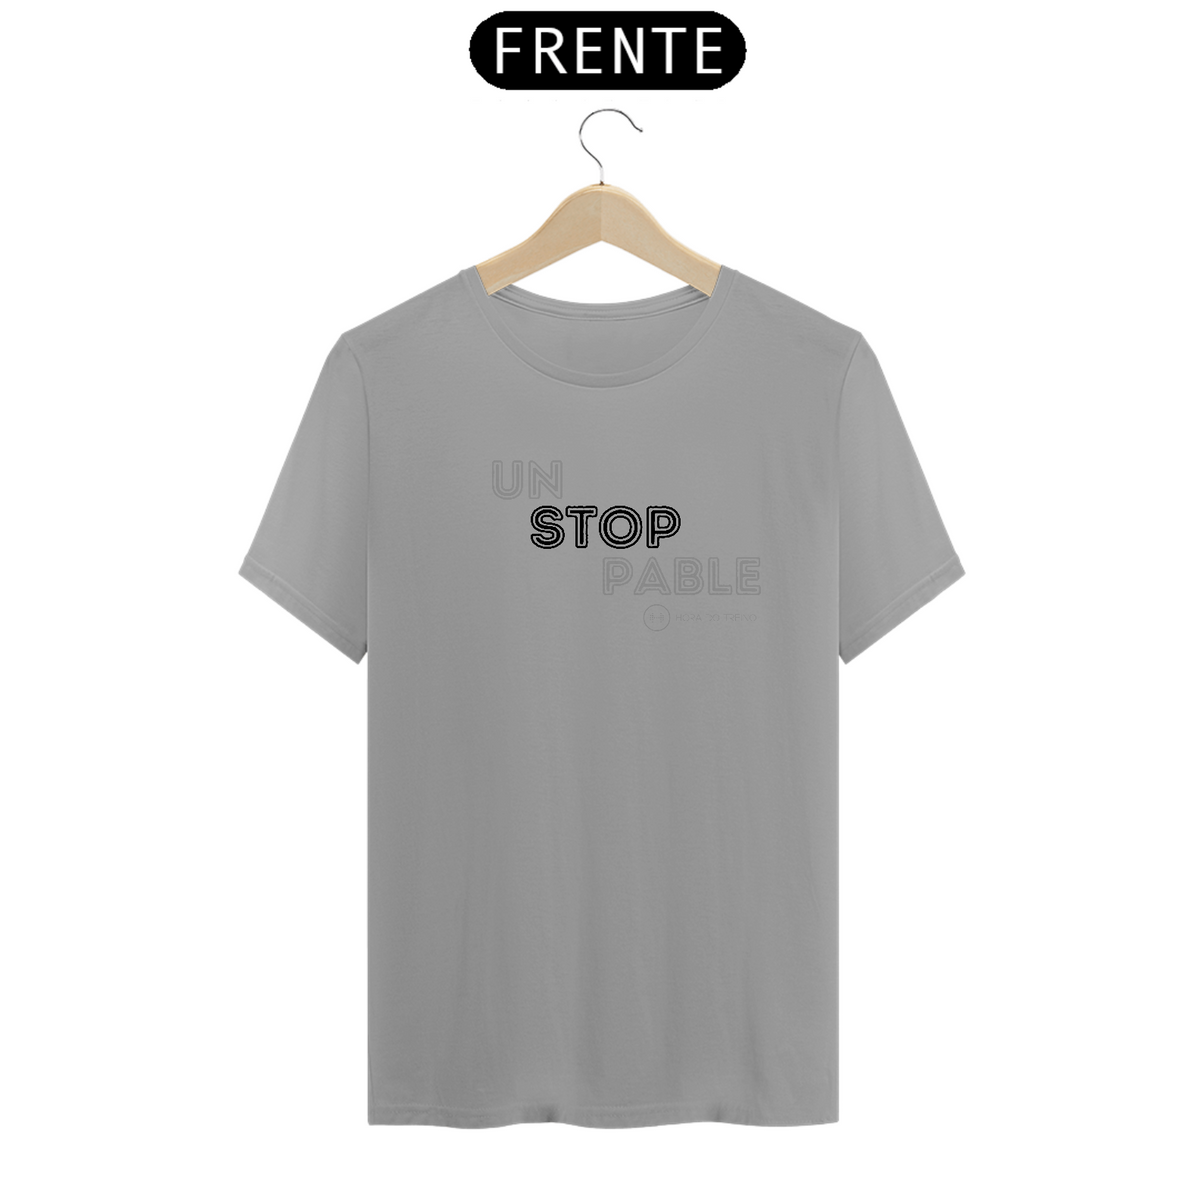 Nome do produto: Camiseta Magic Stop